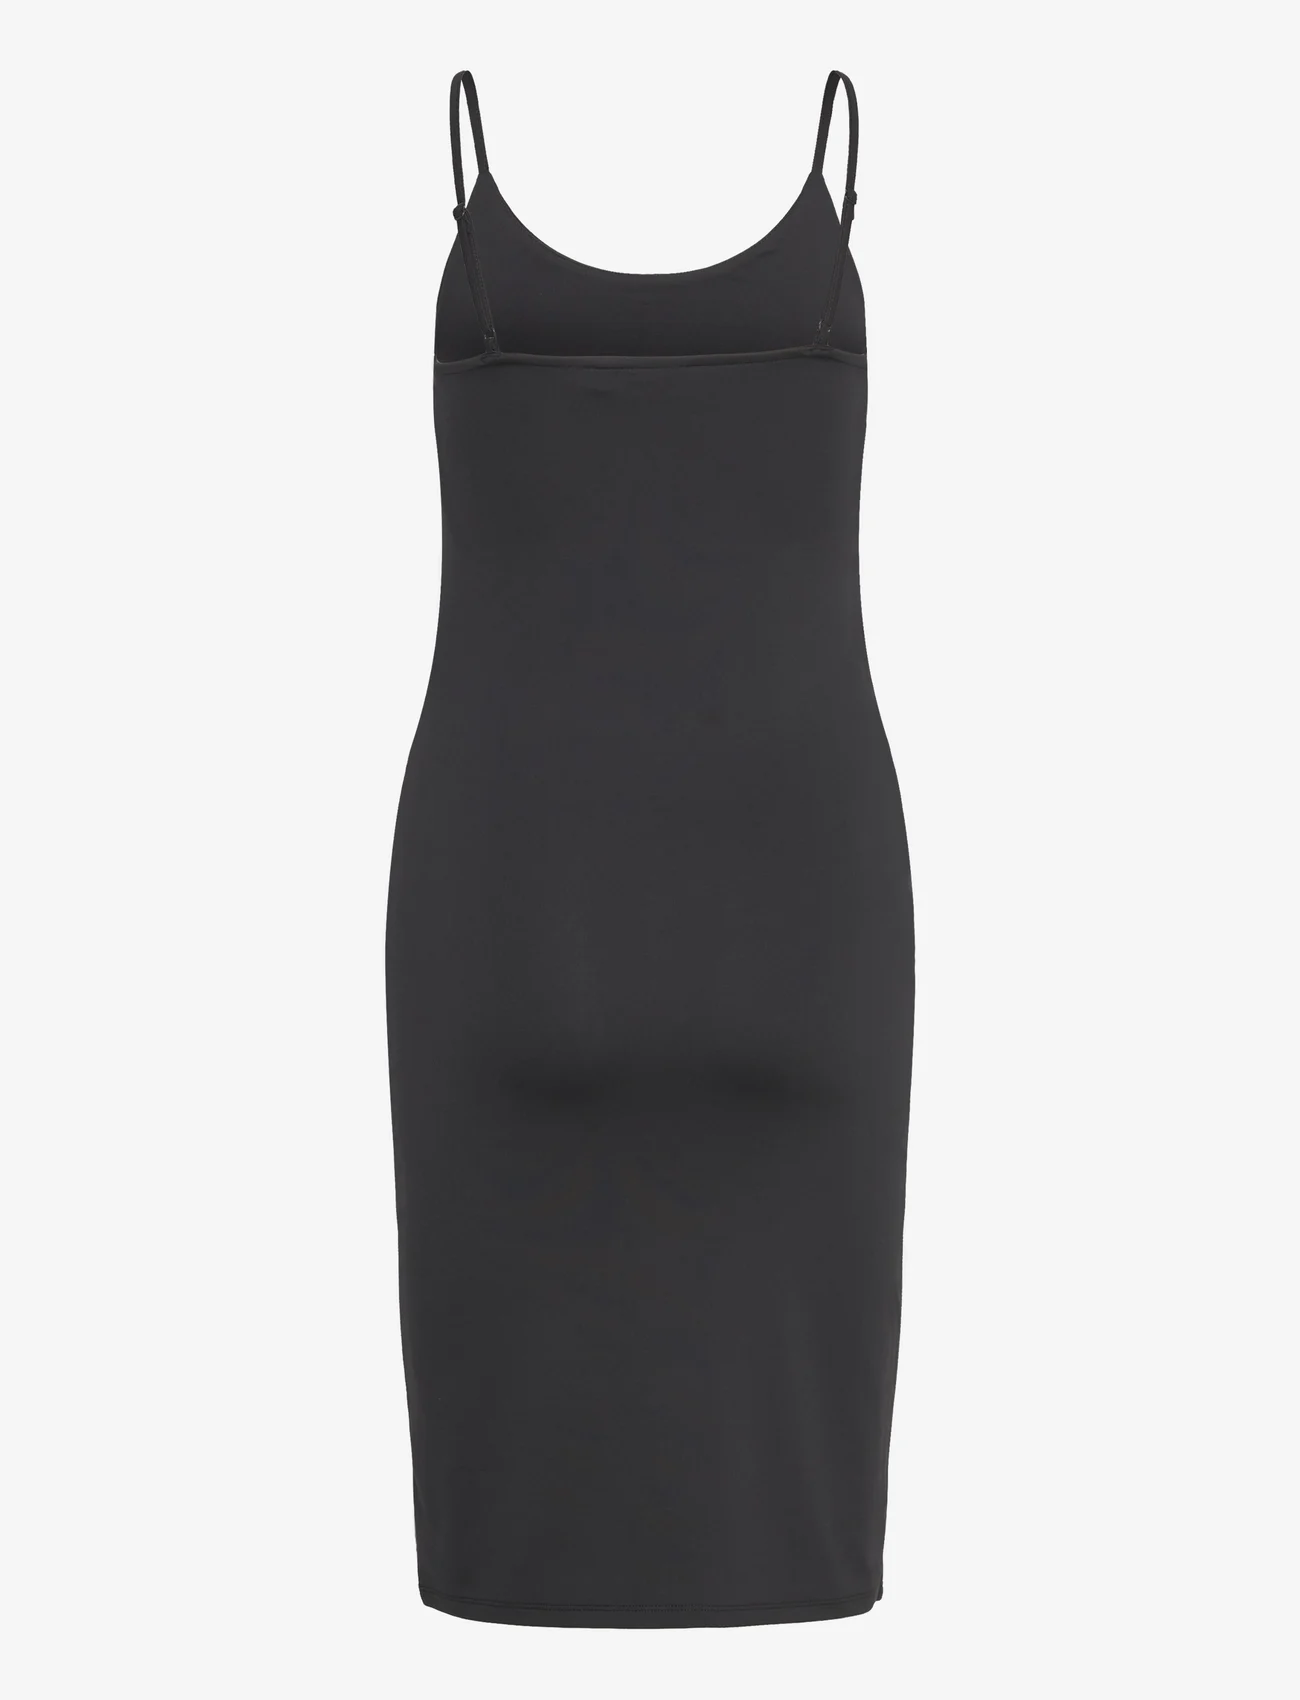 Vila - VIKENZA SINGLET DRESS - NOOS - slip dresses - black - 1